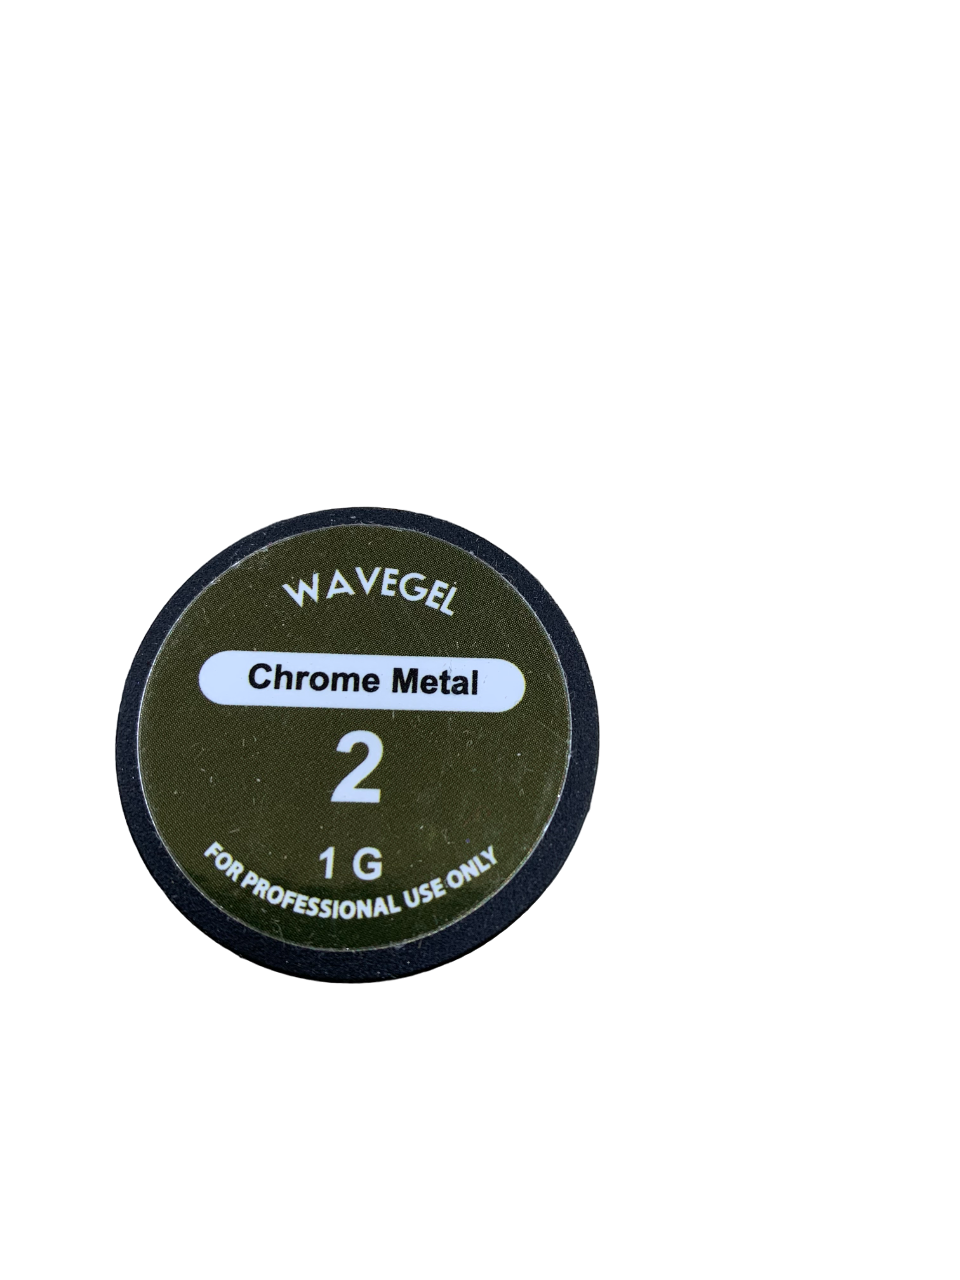 Wavegel Chrome Metal 2